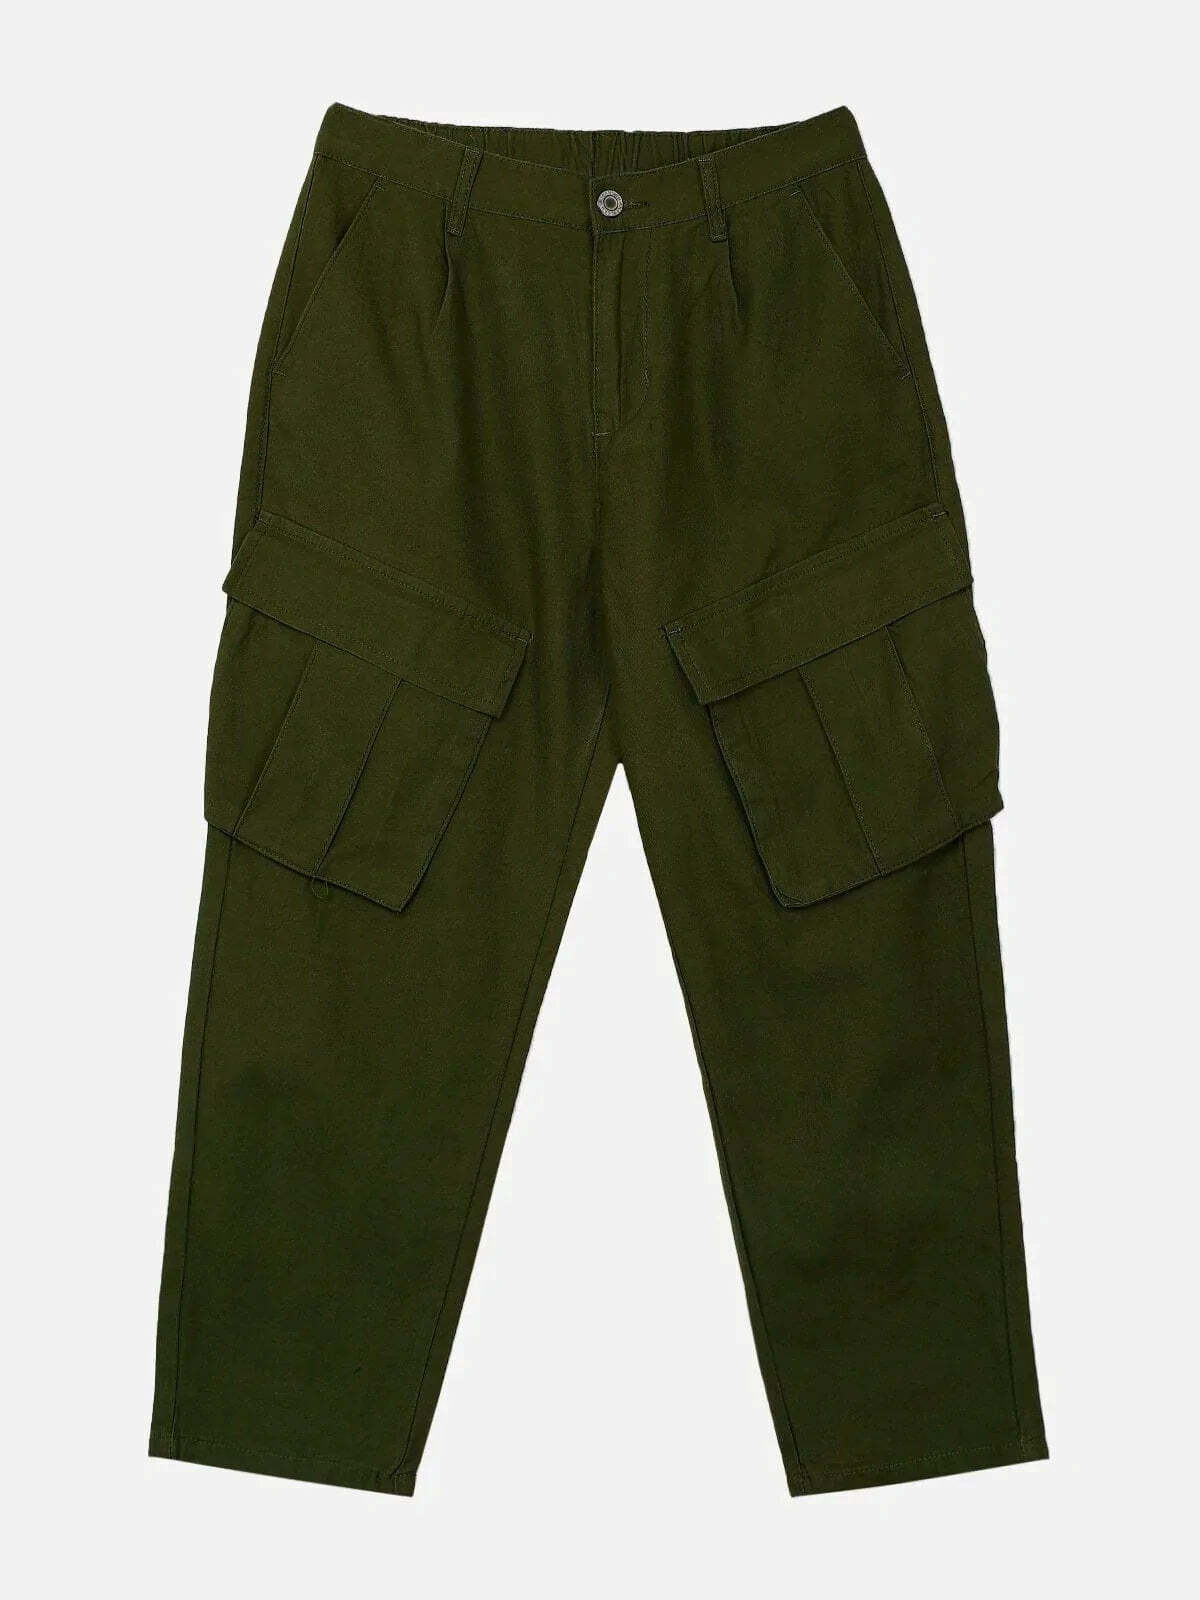 large cargo pocket pants edgy & functional streetwear 6099